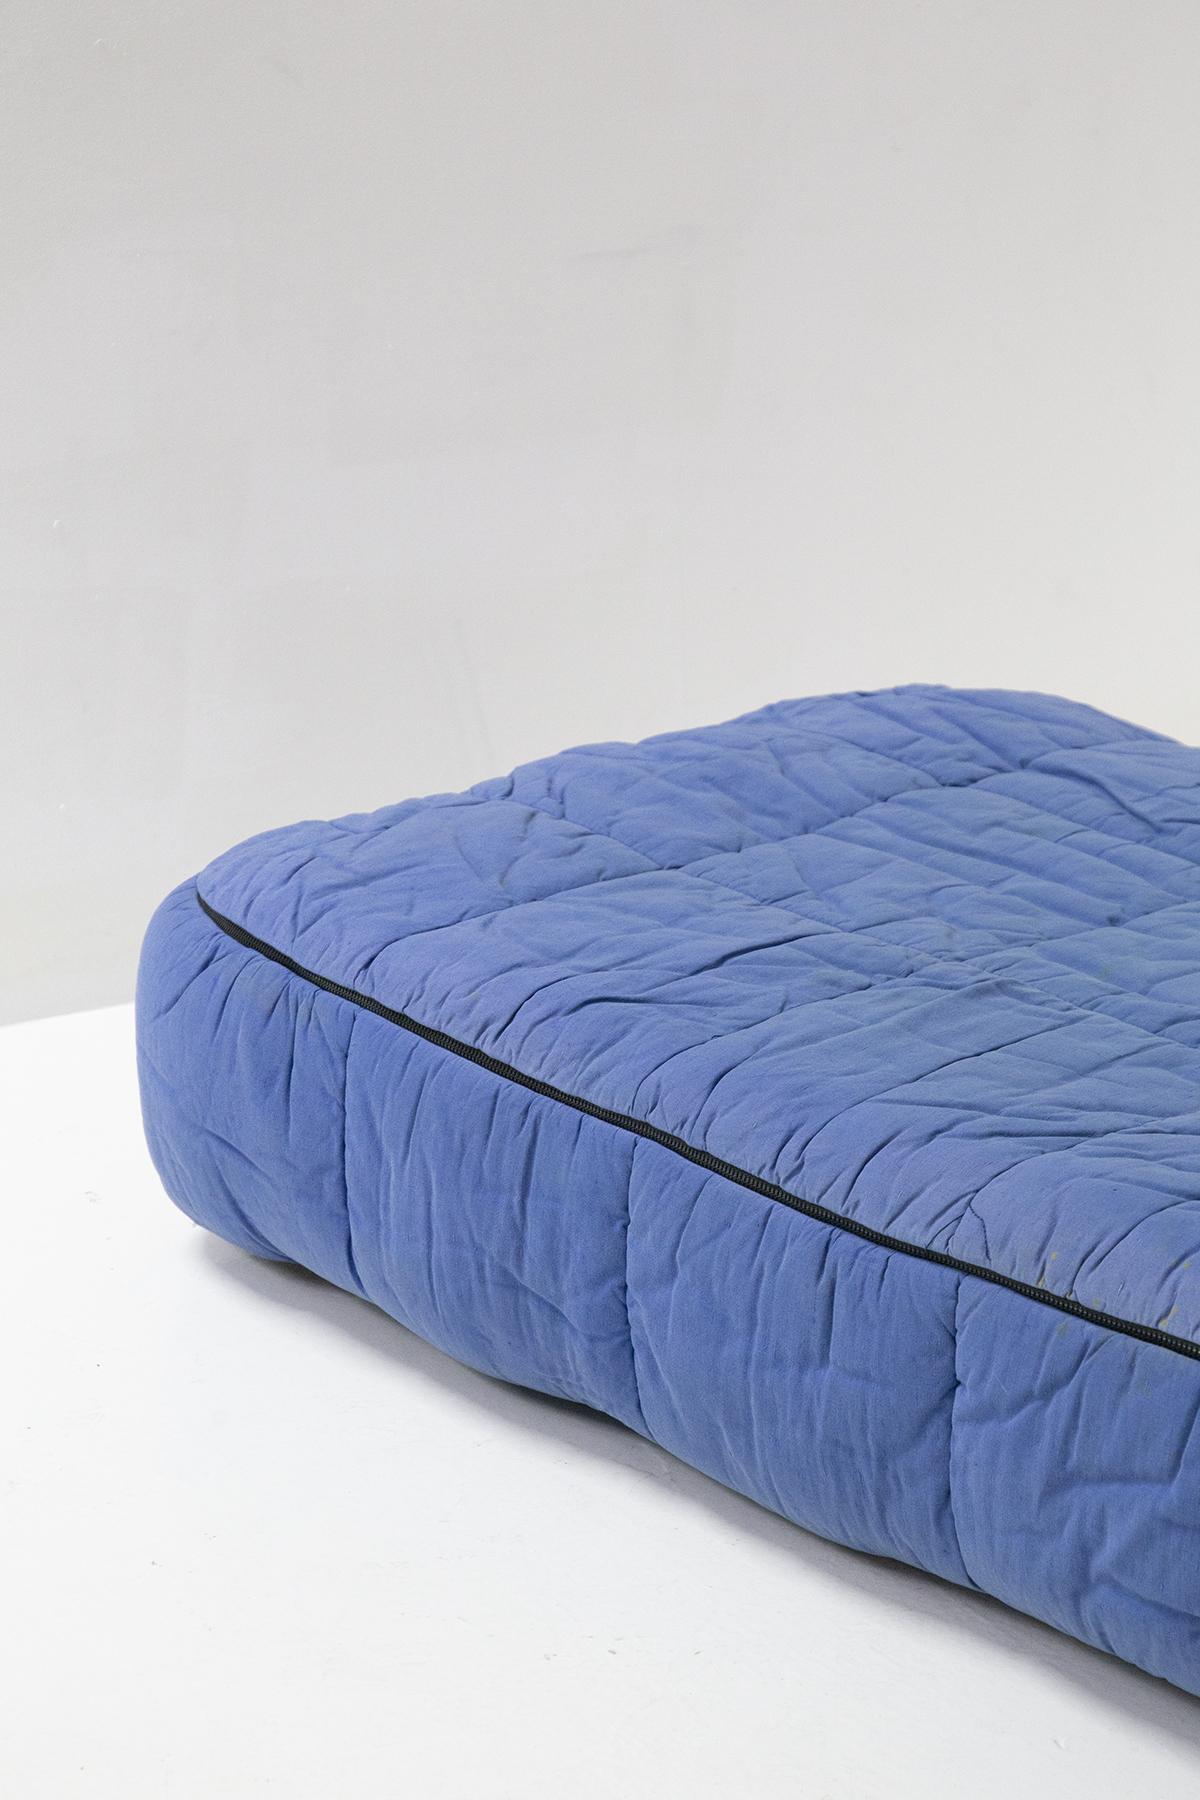 Single bed designed by Cini Boeri for the Italian manufacturer Arflex, model 